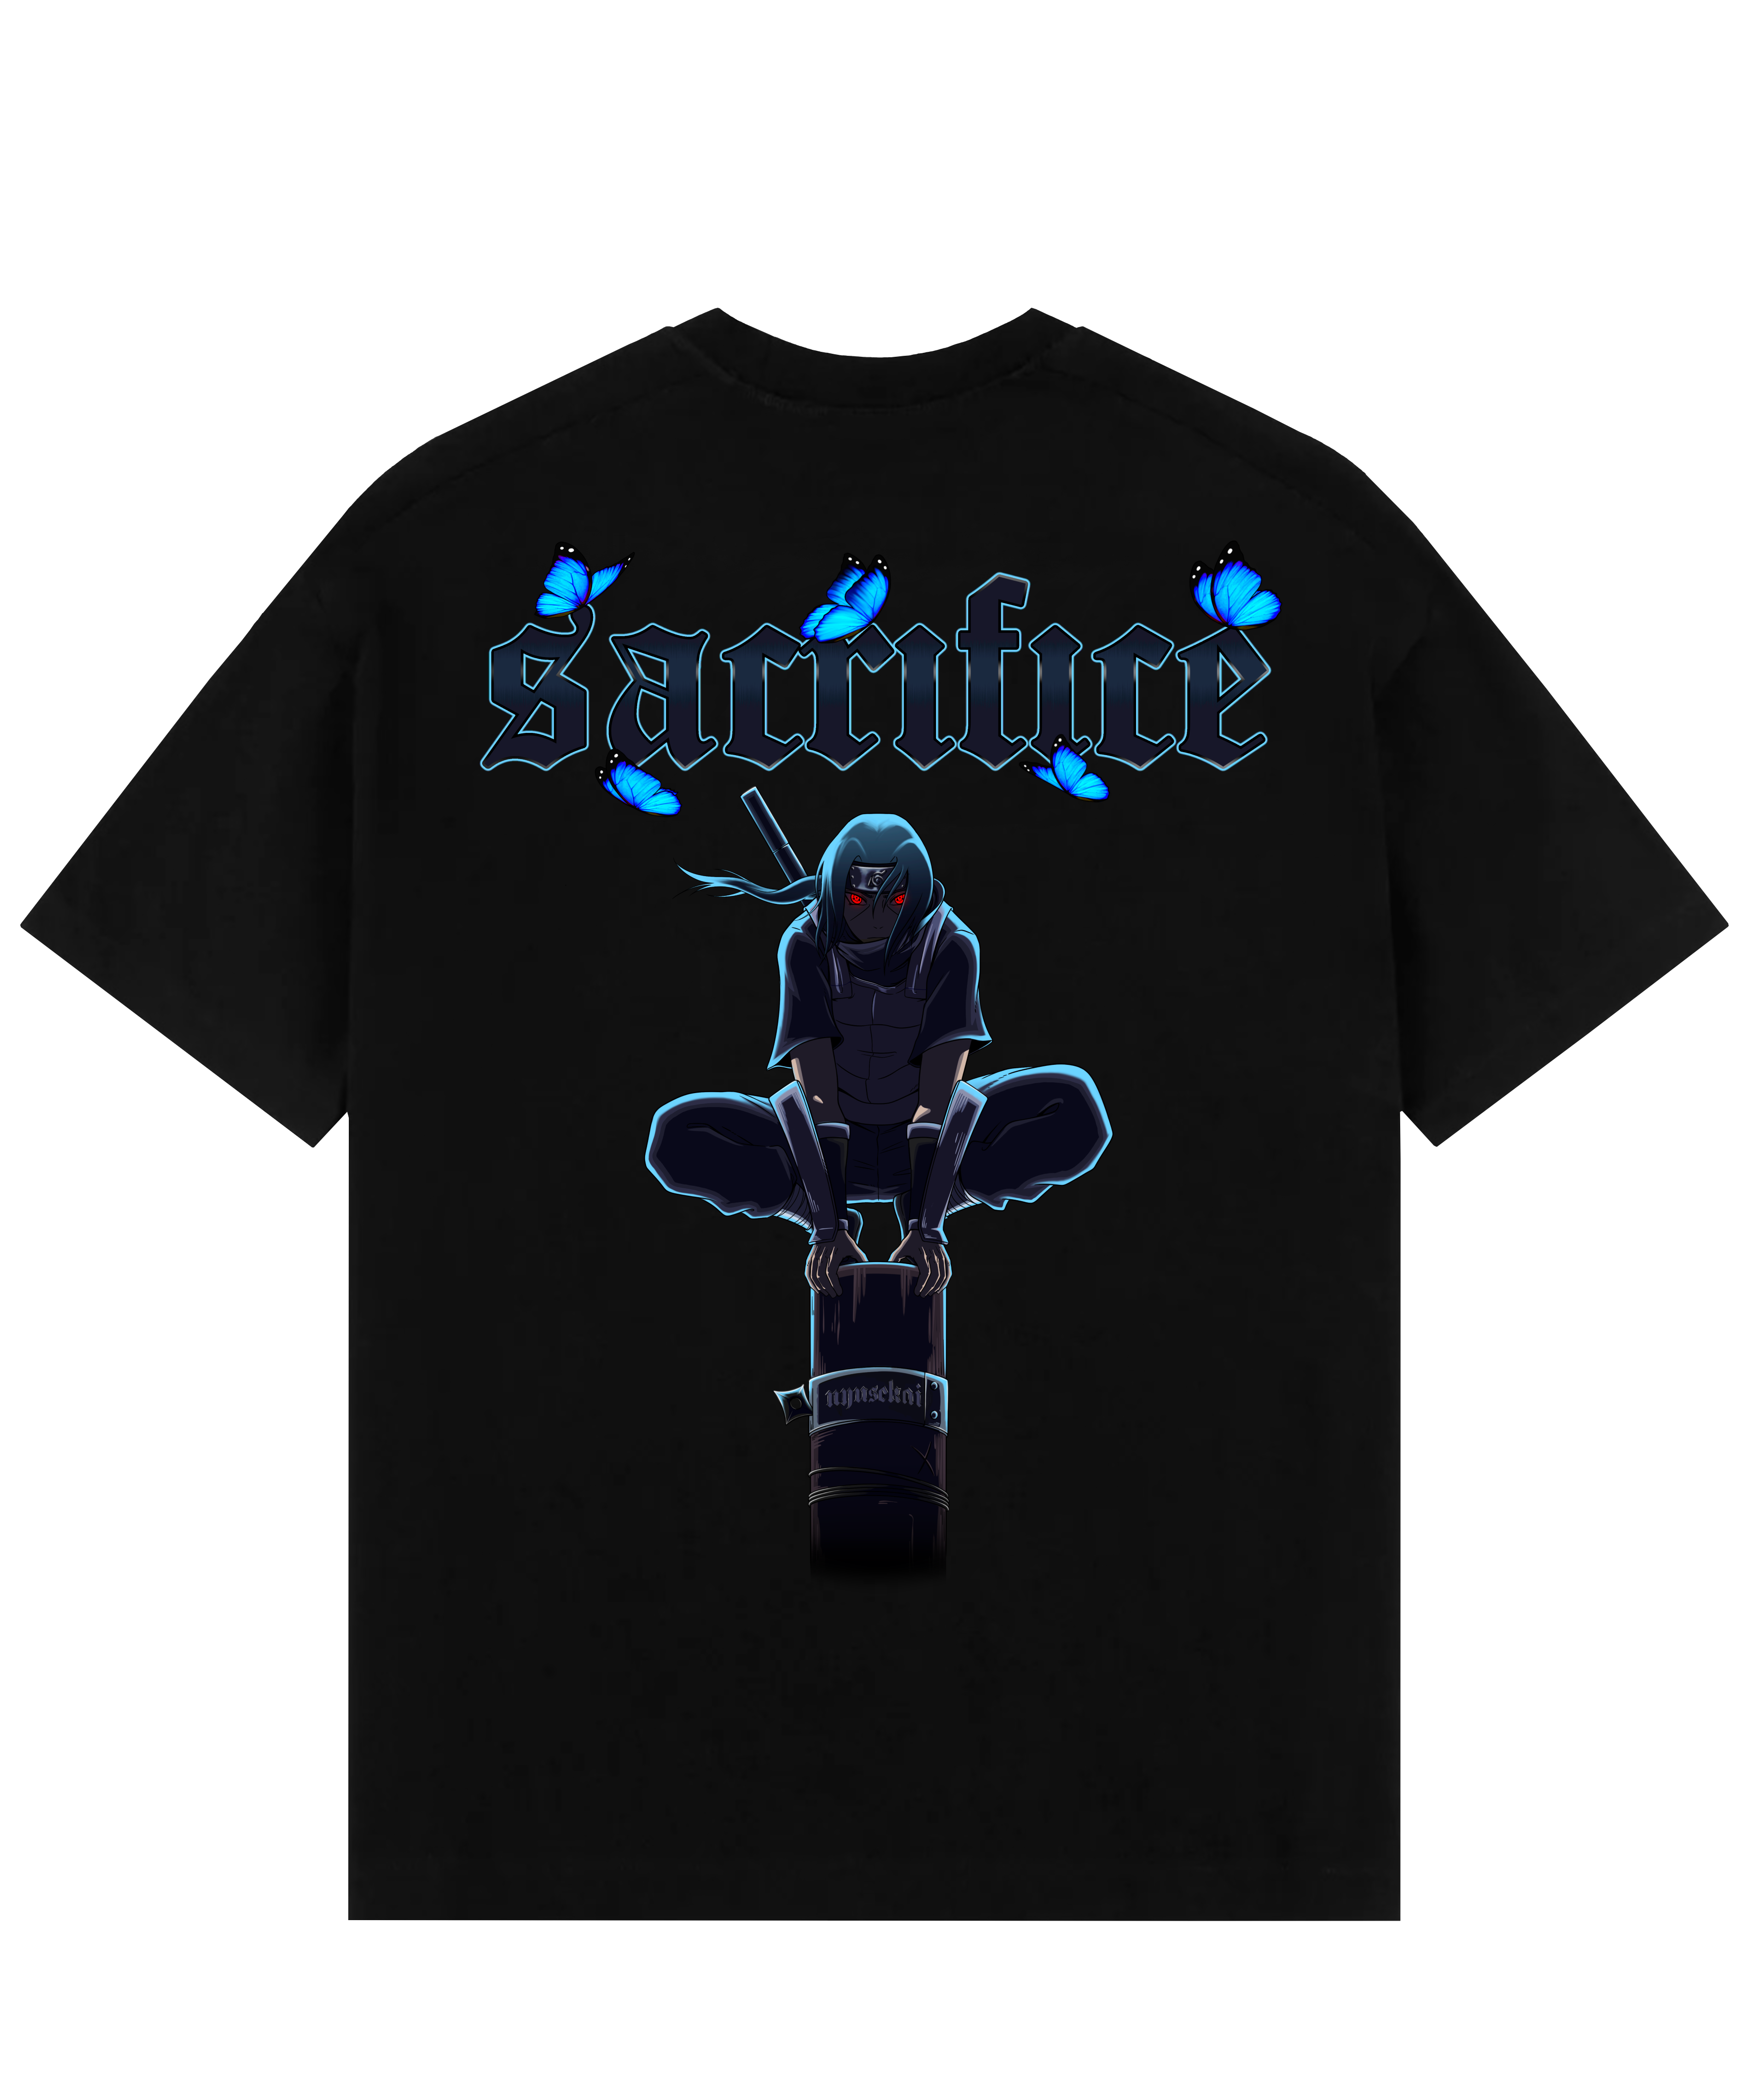 "Itachi X Butterfly - Naruto Shippuden" T-shirt oversize